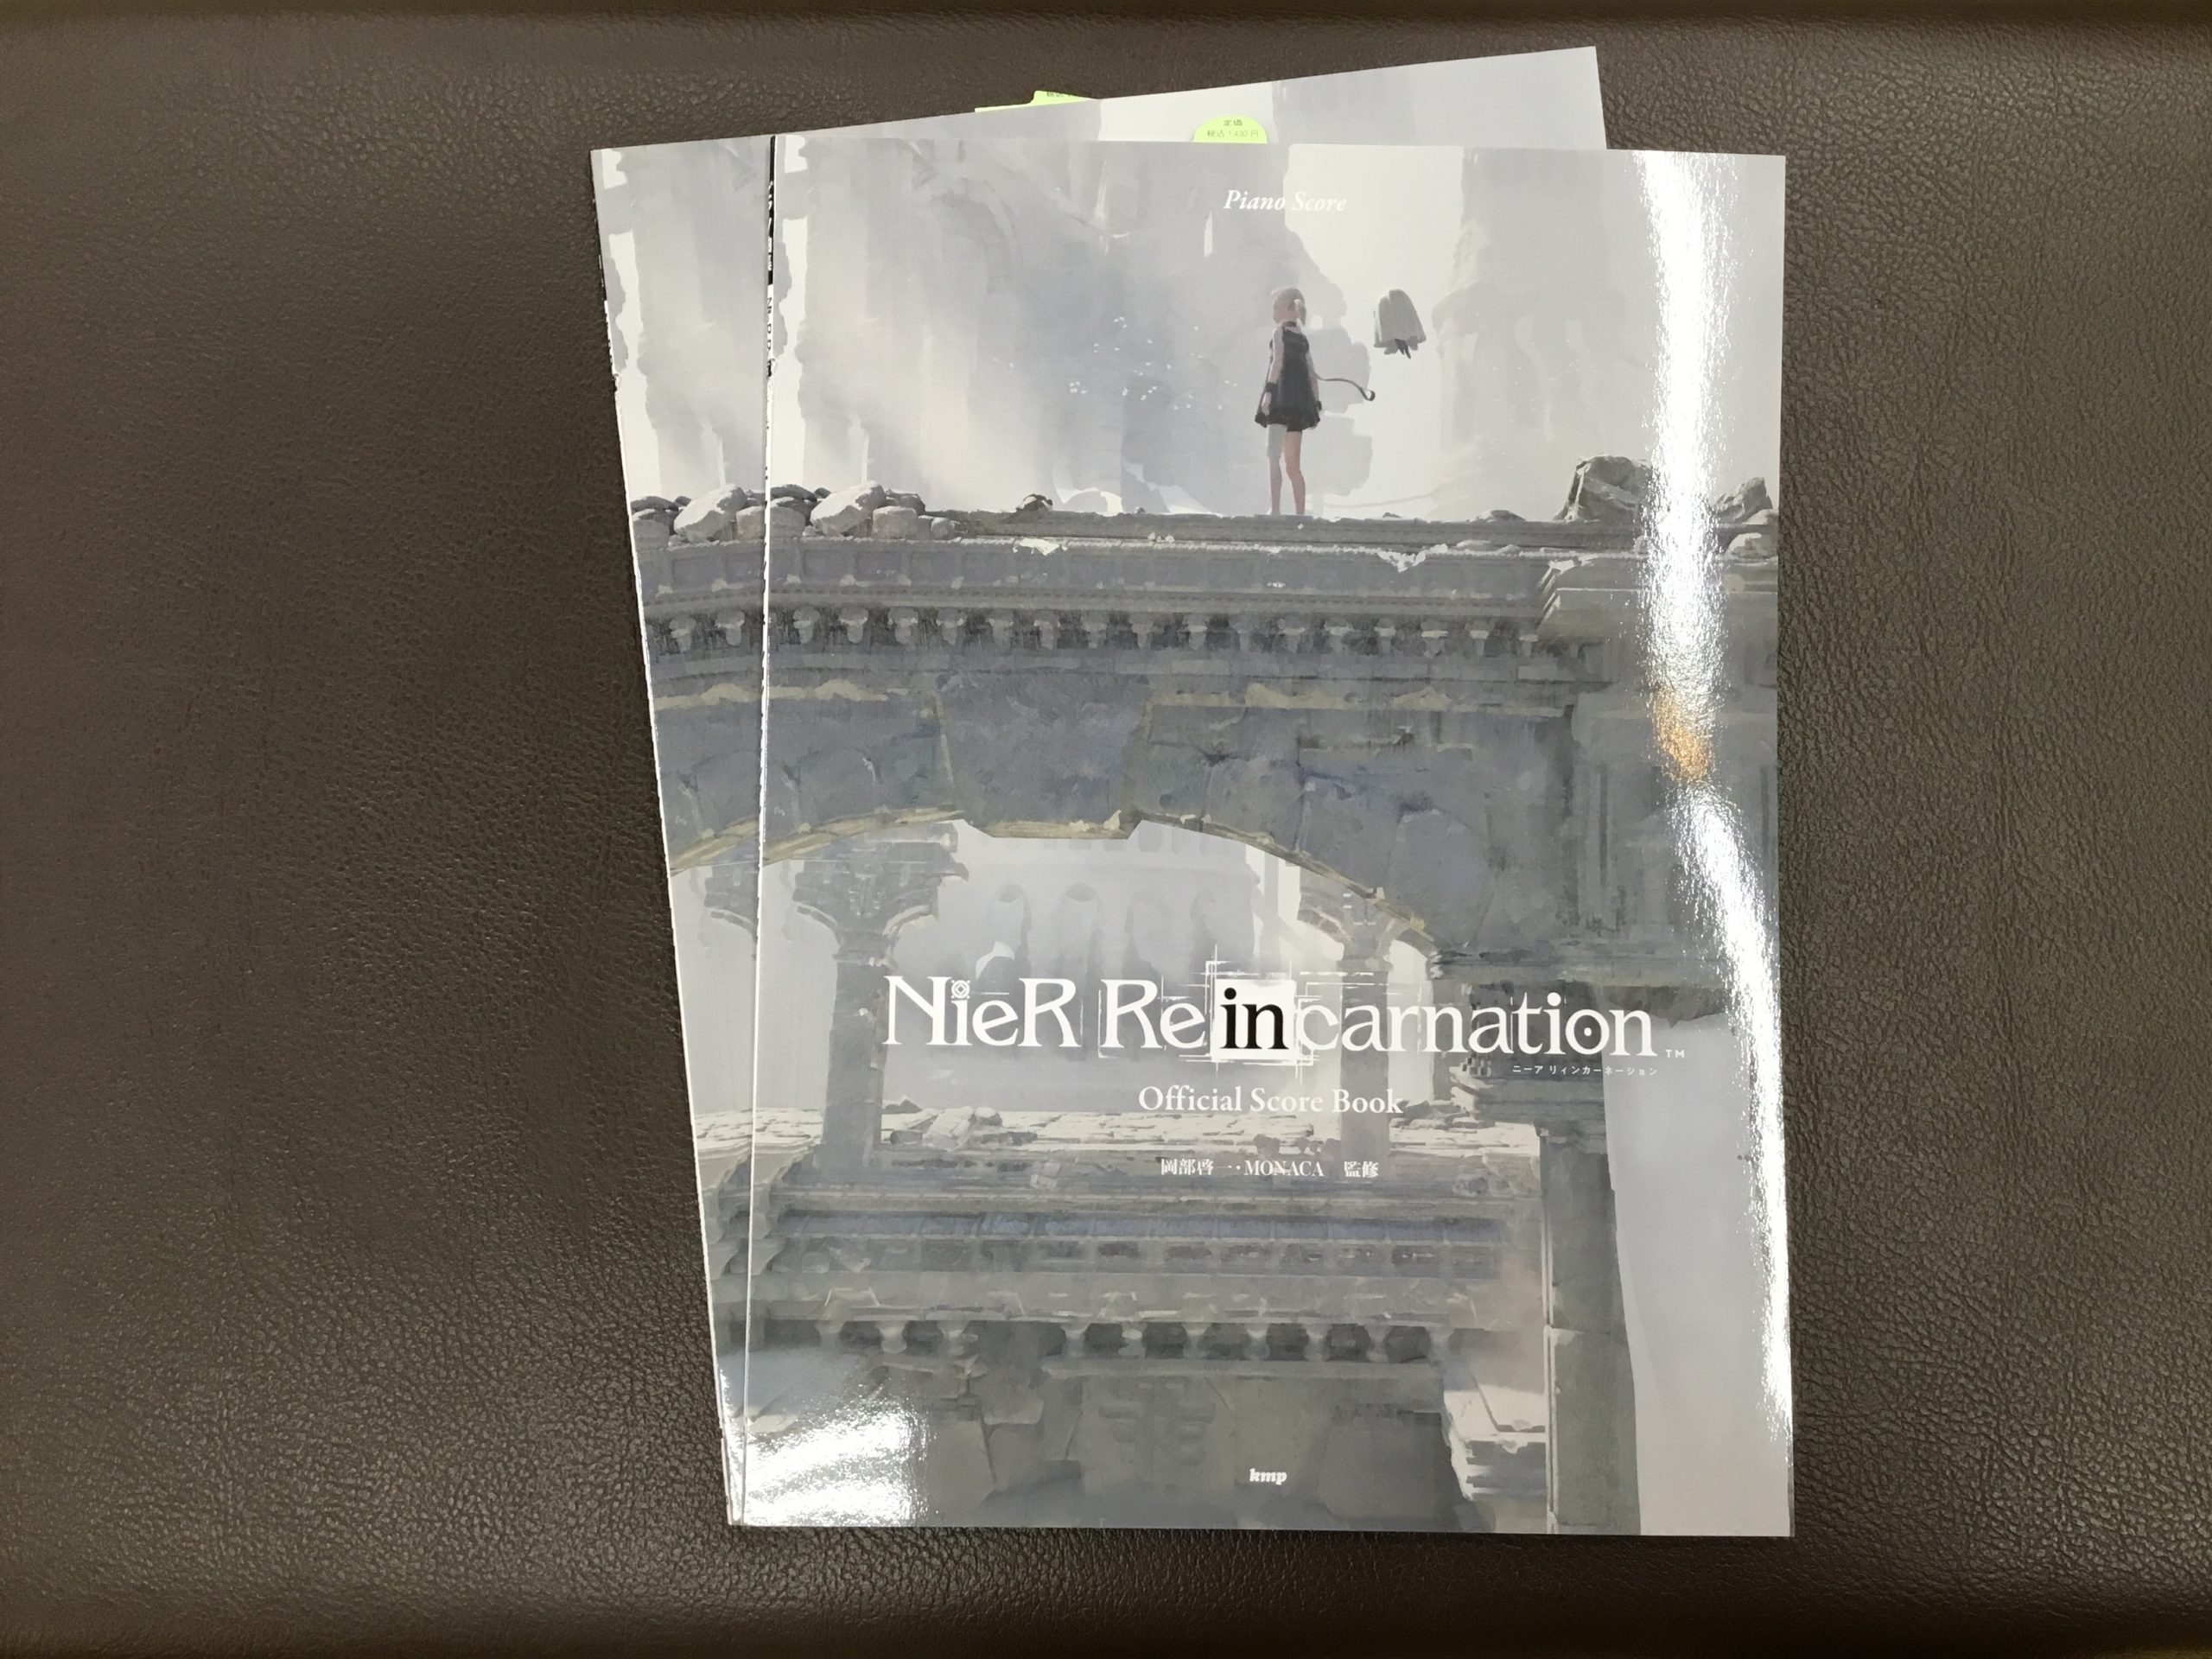 *『NieR Re[in]carnation』のゲーム内BGMを収載したオフィシャルピアノ曲集 スクウェア・エニックスからリリースされた「NieR」シリーズ初のスマートフォン向けタイトル『NieR Re[in]carnation』のゲーム内BGMを収載したオフィシャルピアノ曲集 切なくも美しいメロデ […]